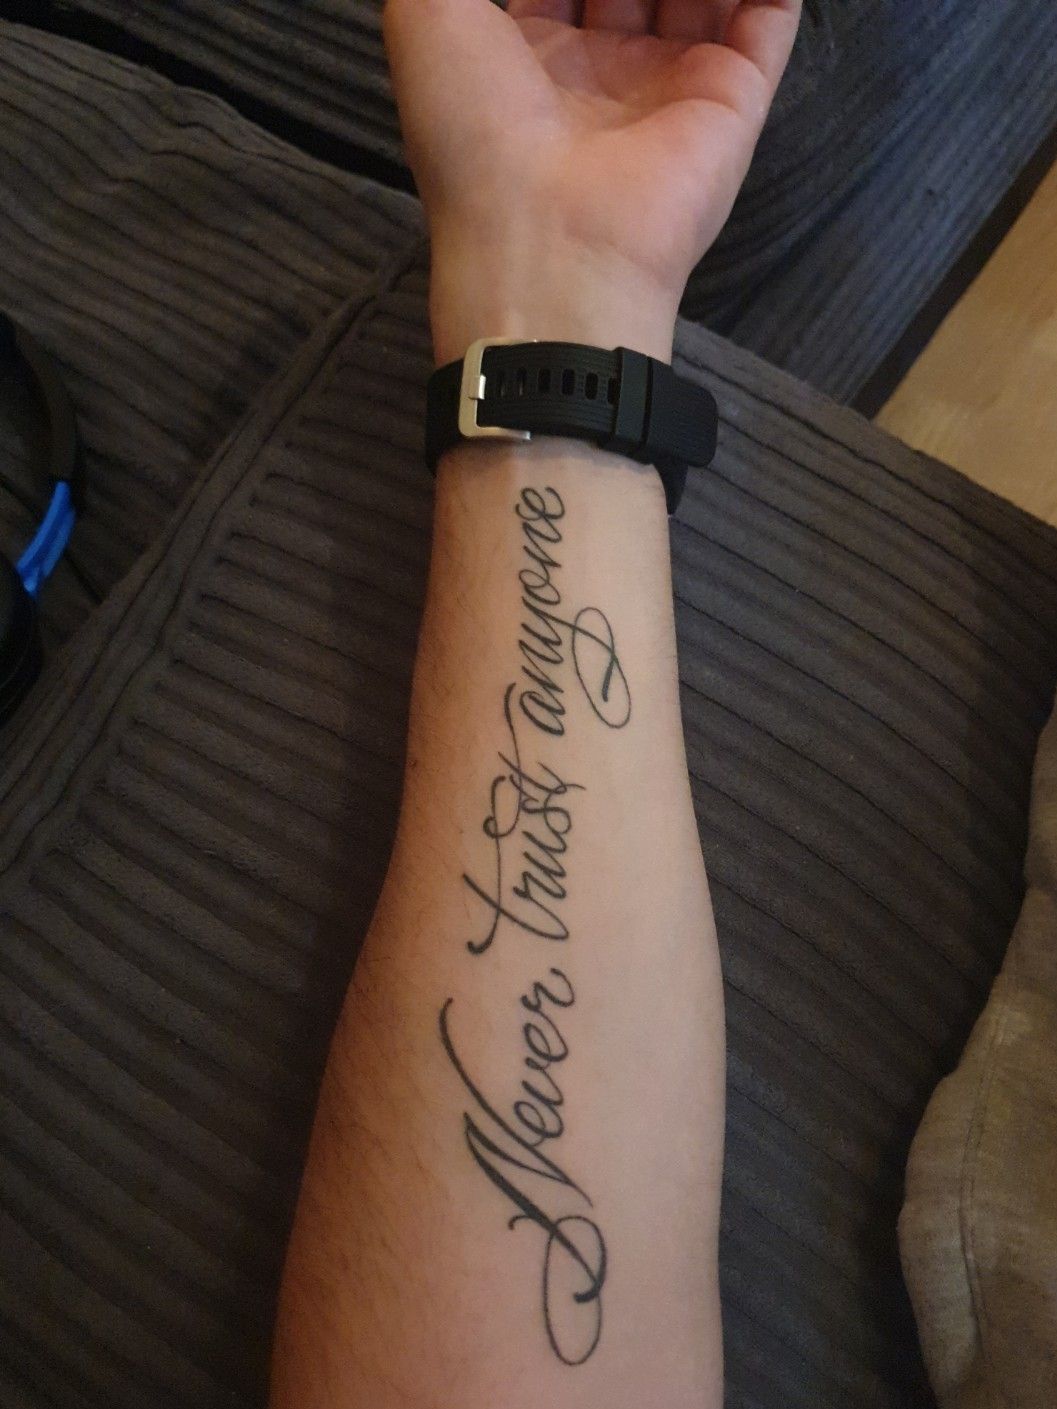 Tattoo uploaded by Mohamed Hafassa • Never trust anyone • Tattoodo